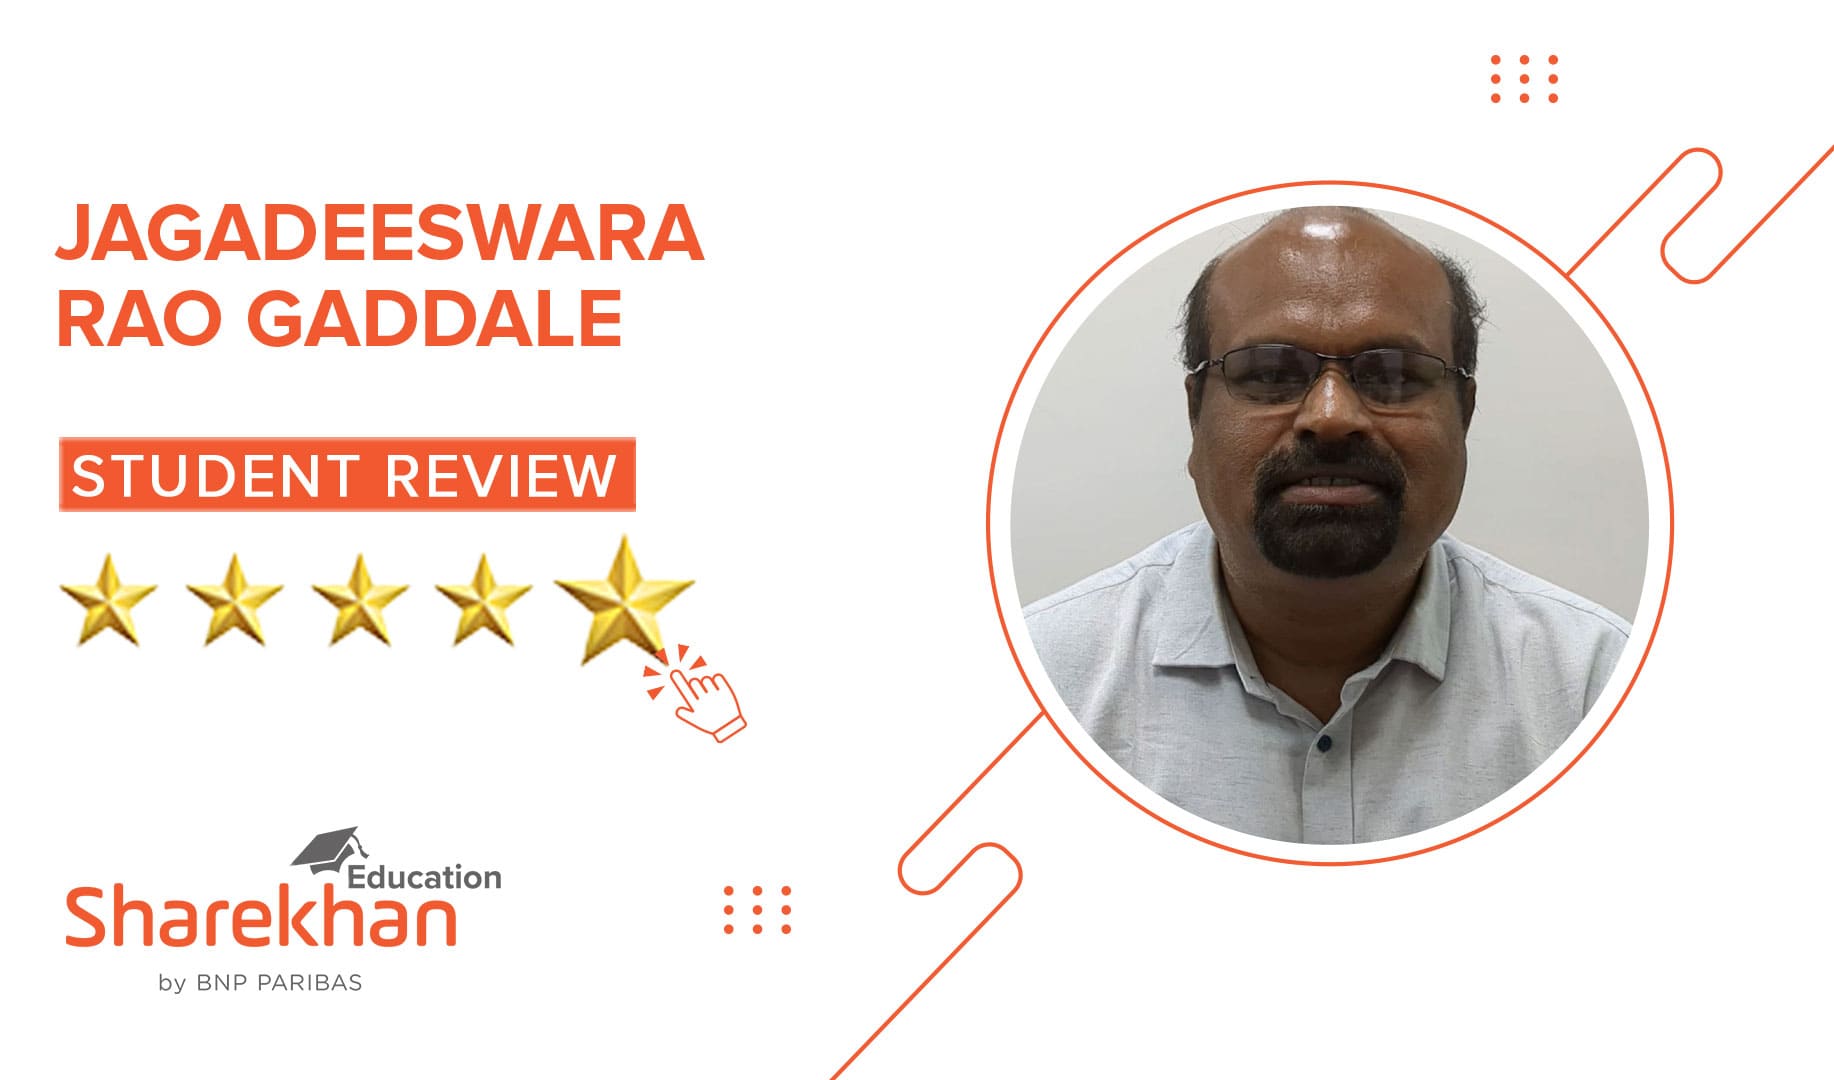 Sharekhan Education Review by Jagadeeswara Rao Gaddale